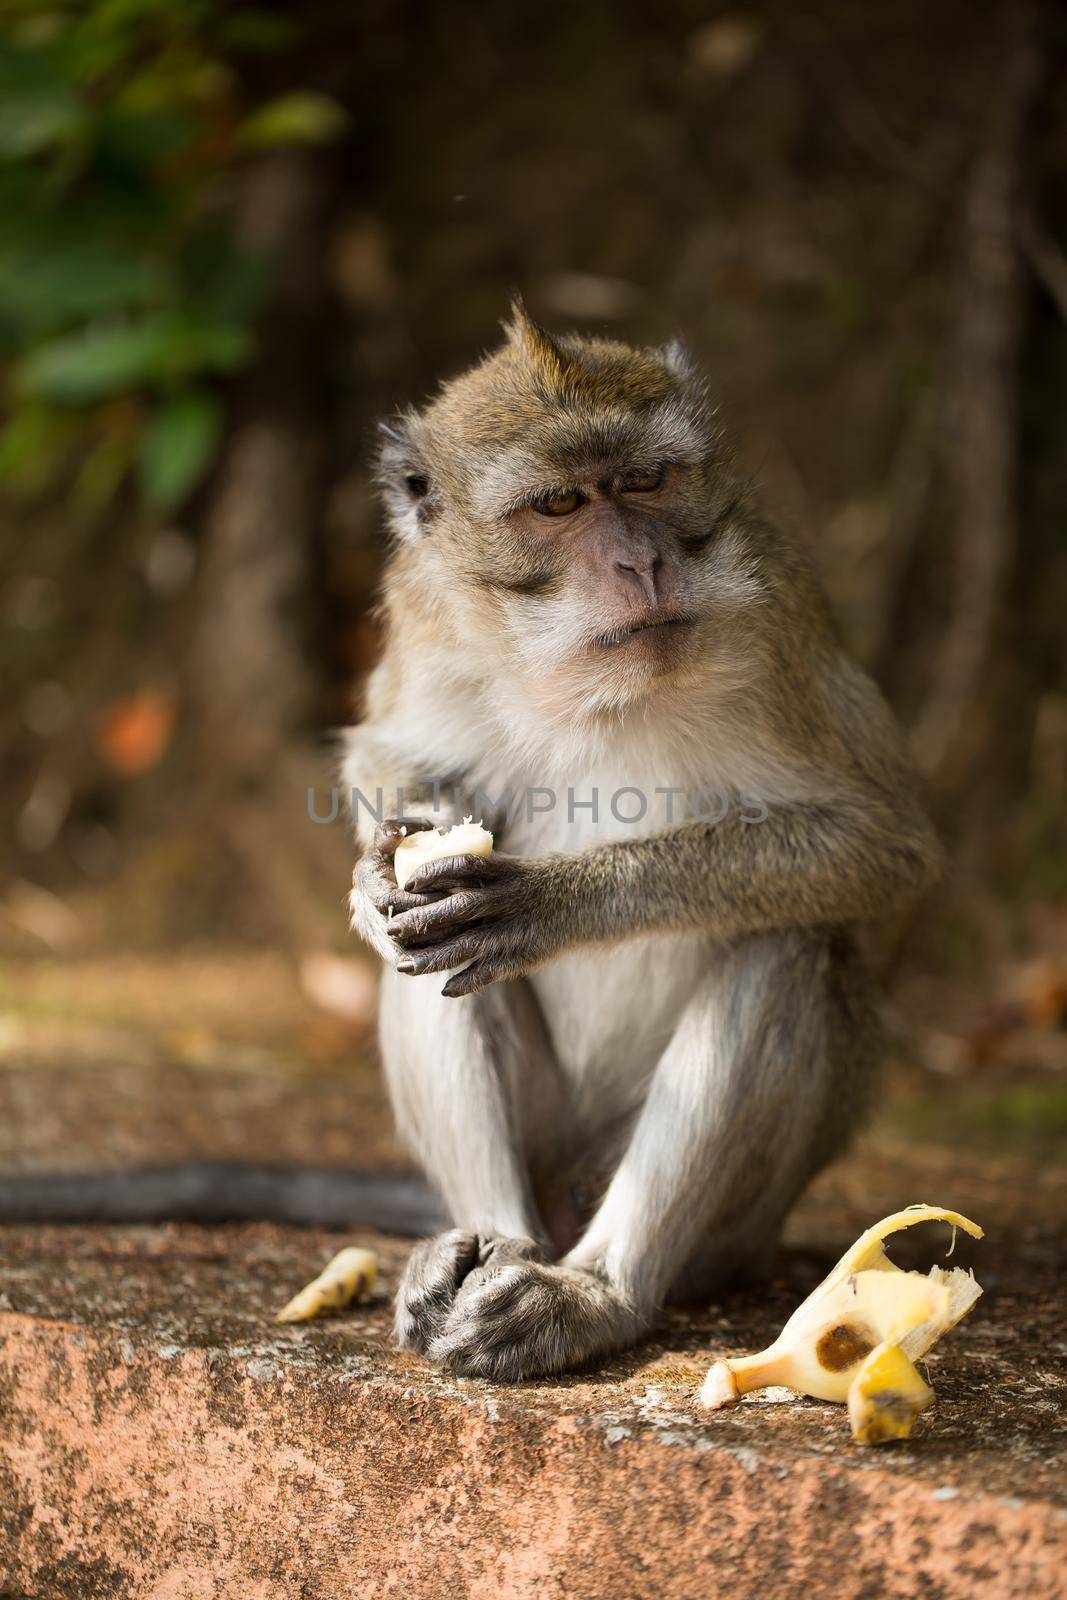 A monkey eats a banana in a natural environment park.